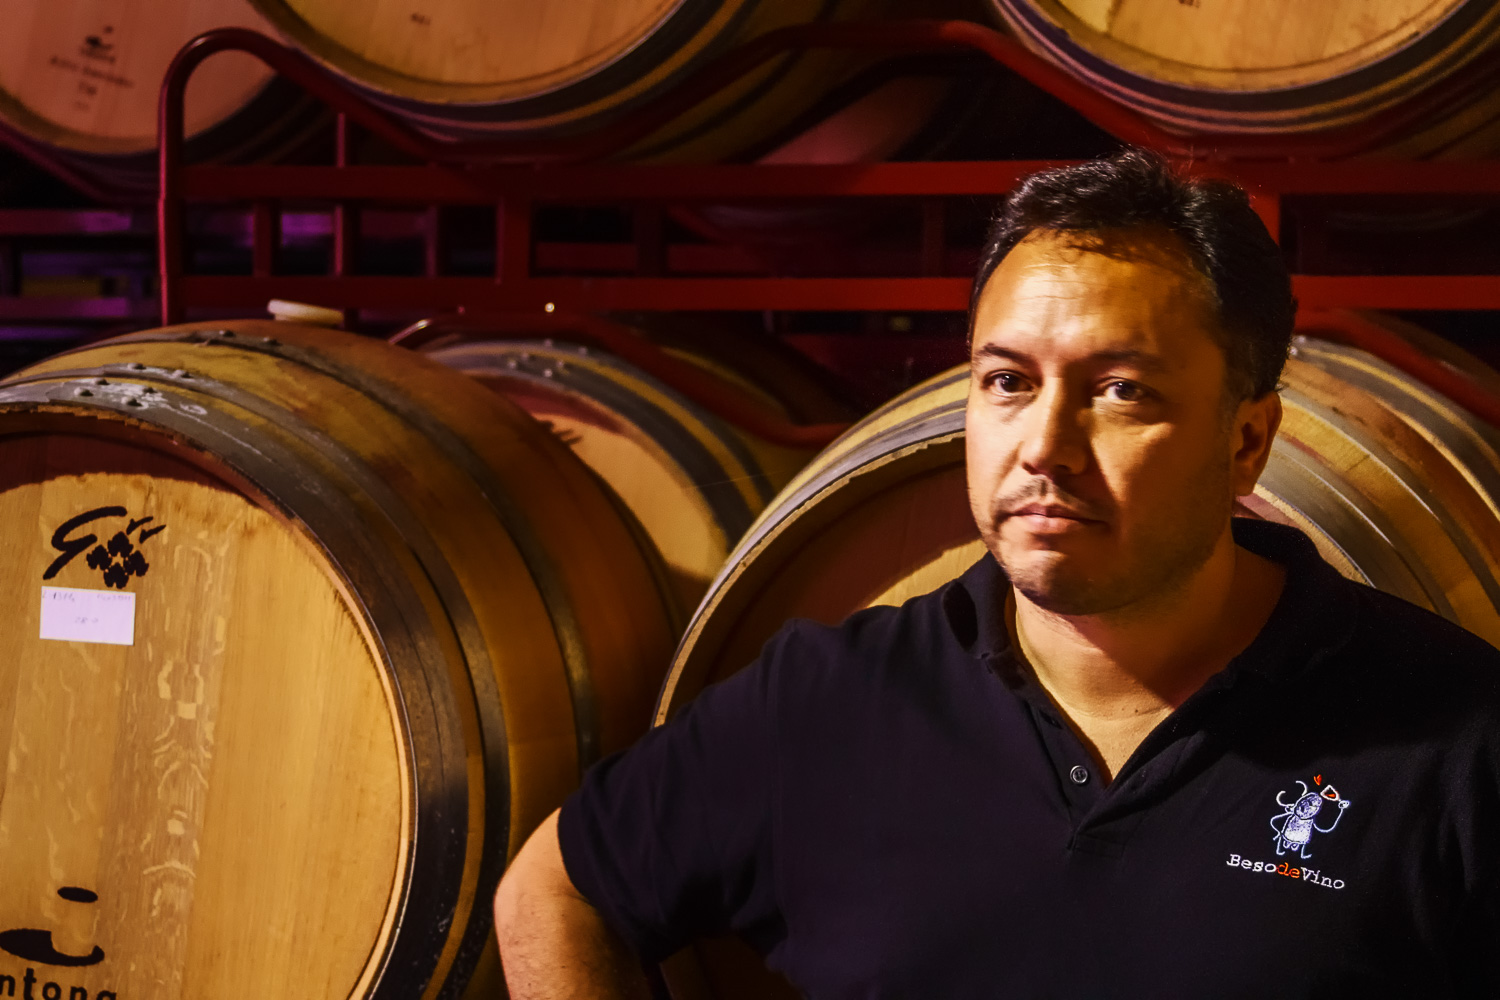 Winemaker Marcelo Morales